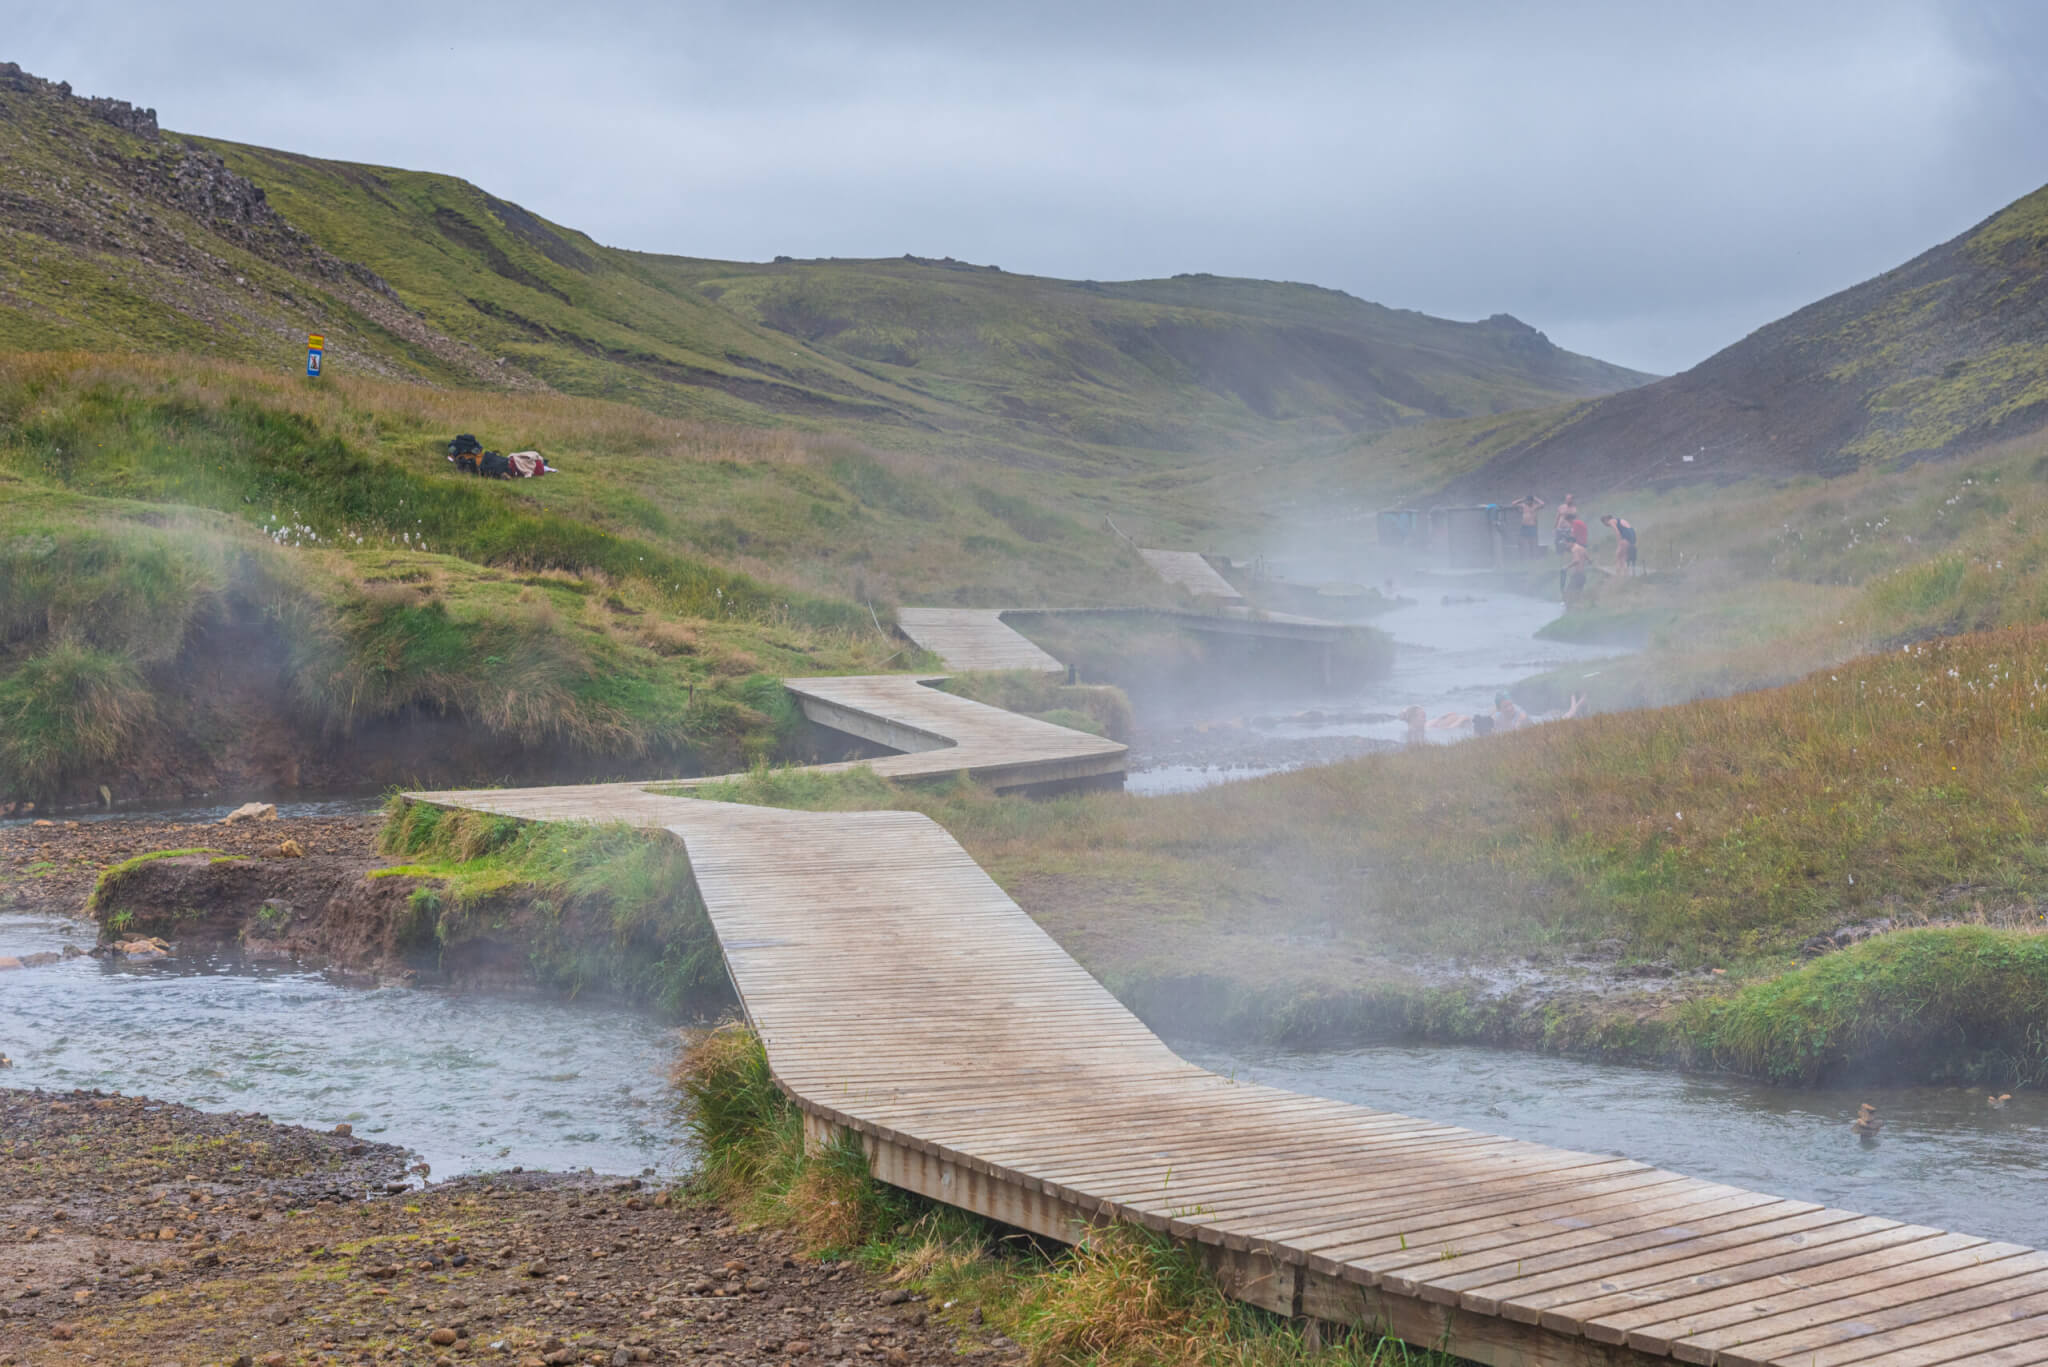 Hot springs at Reykjadalur valley in Iceland